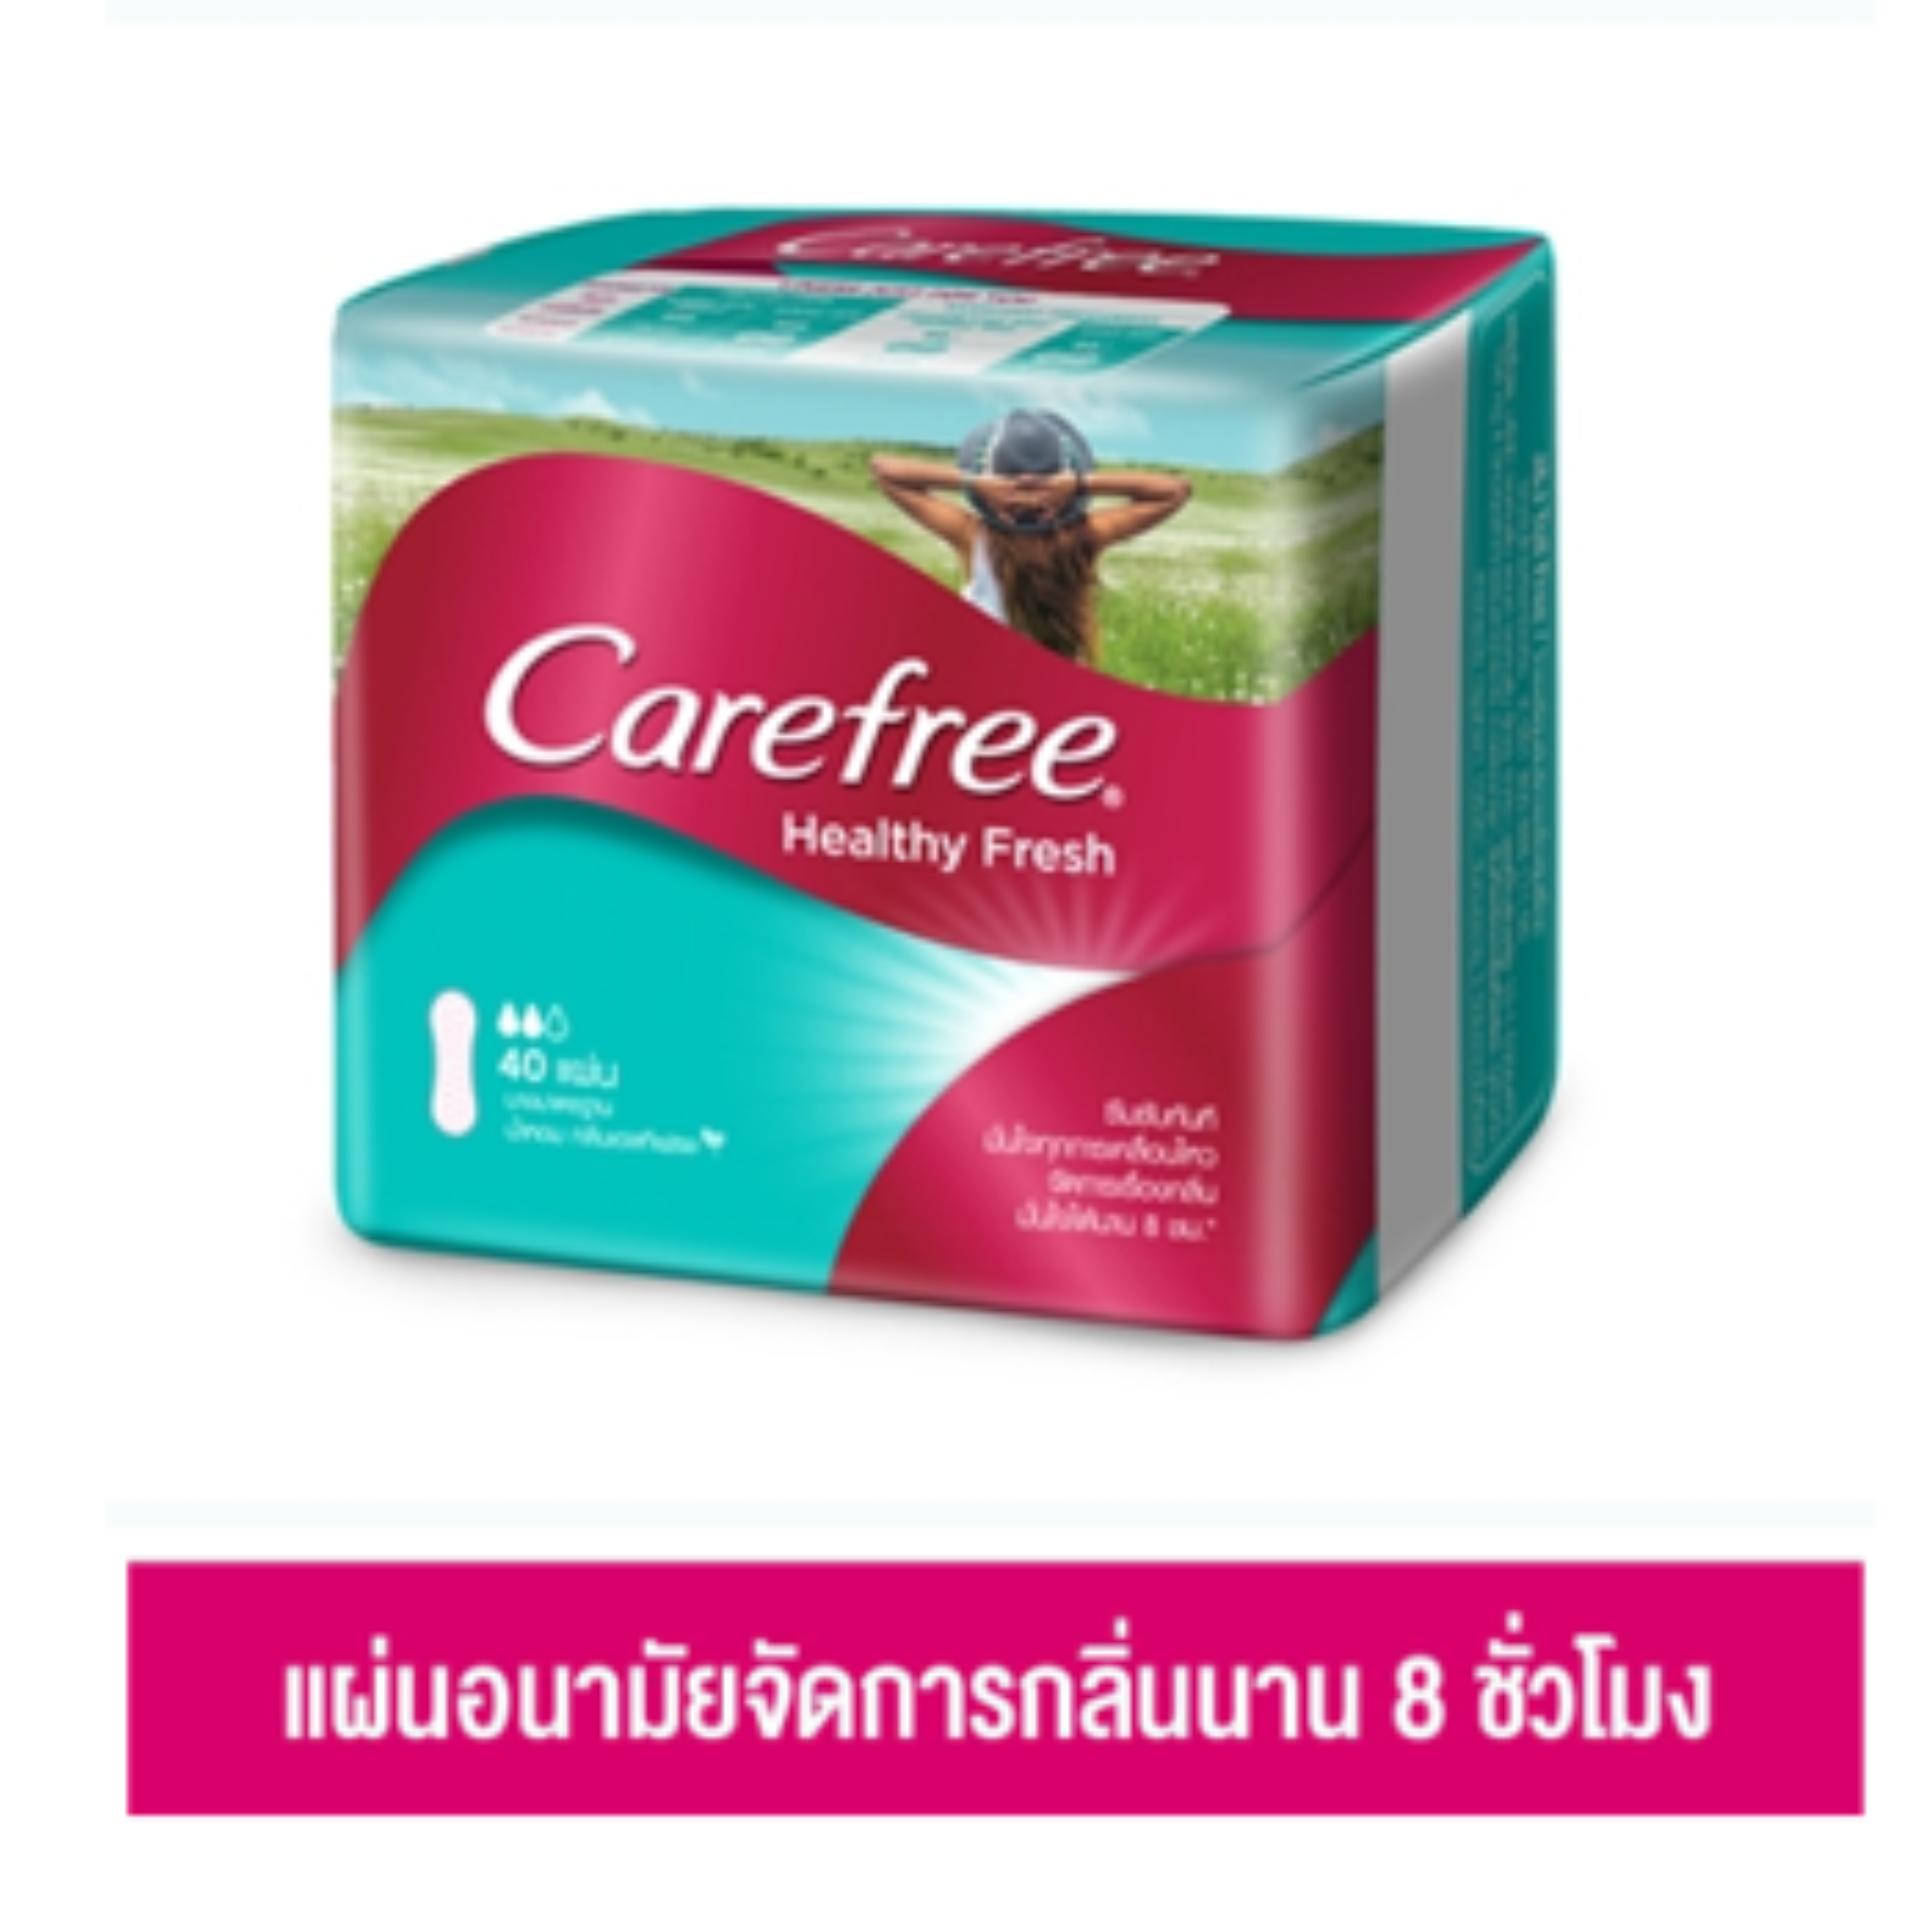 Carefree แคร์ฟรี ผ้าอนามัย เฮลท์ตี้เฟรช เรคกูล่าร์ 40ชิ้น Carefree Panty Liner Healthy Fresh Regular 40 pcs